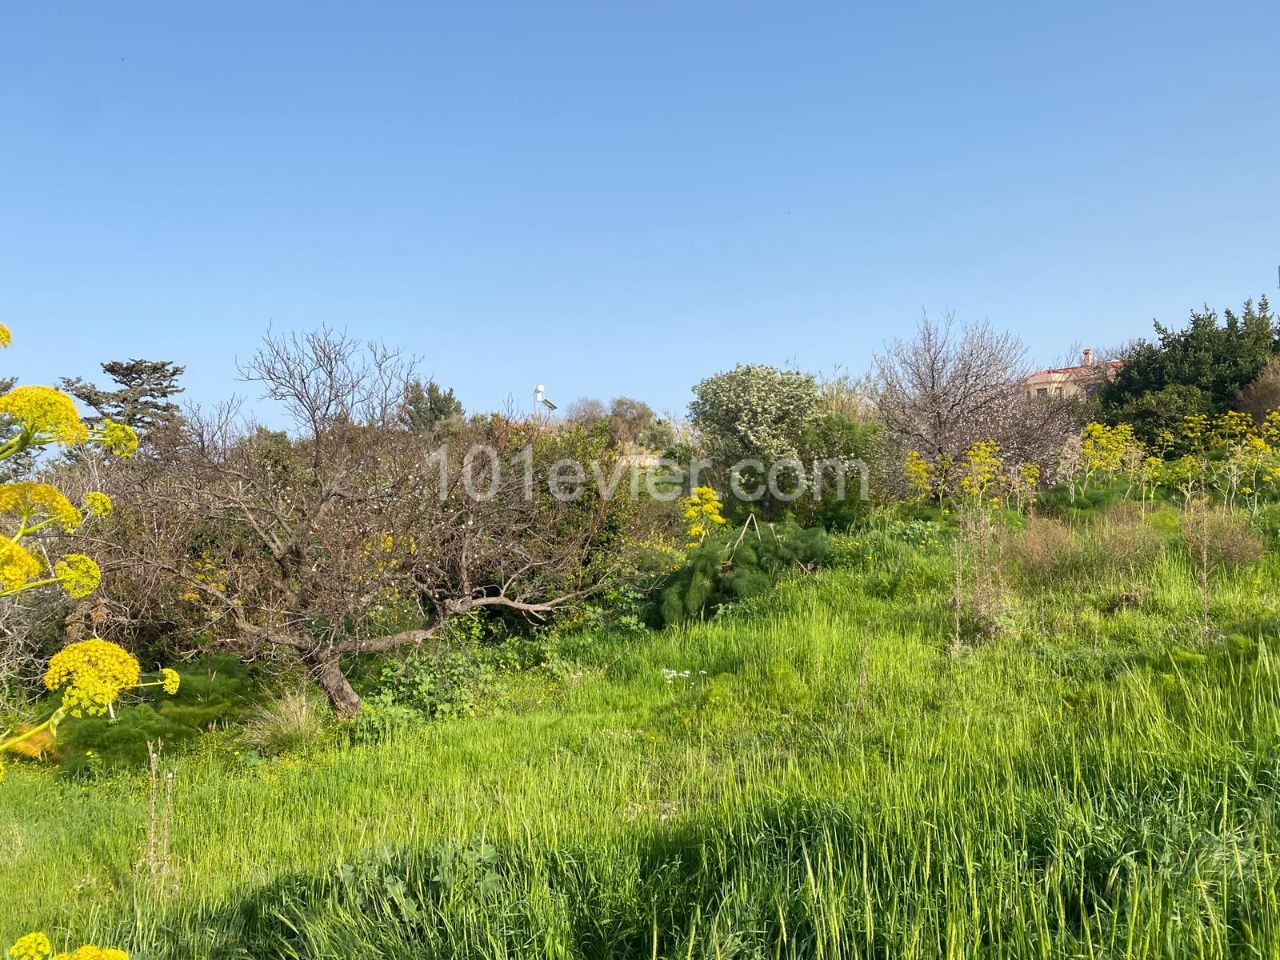 1 Decare Land For Sale In The Village In Girne Esentepe 44000 Stg ** 